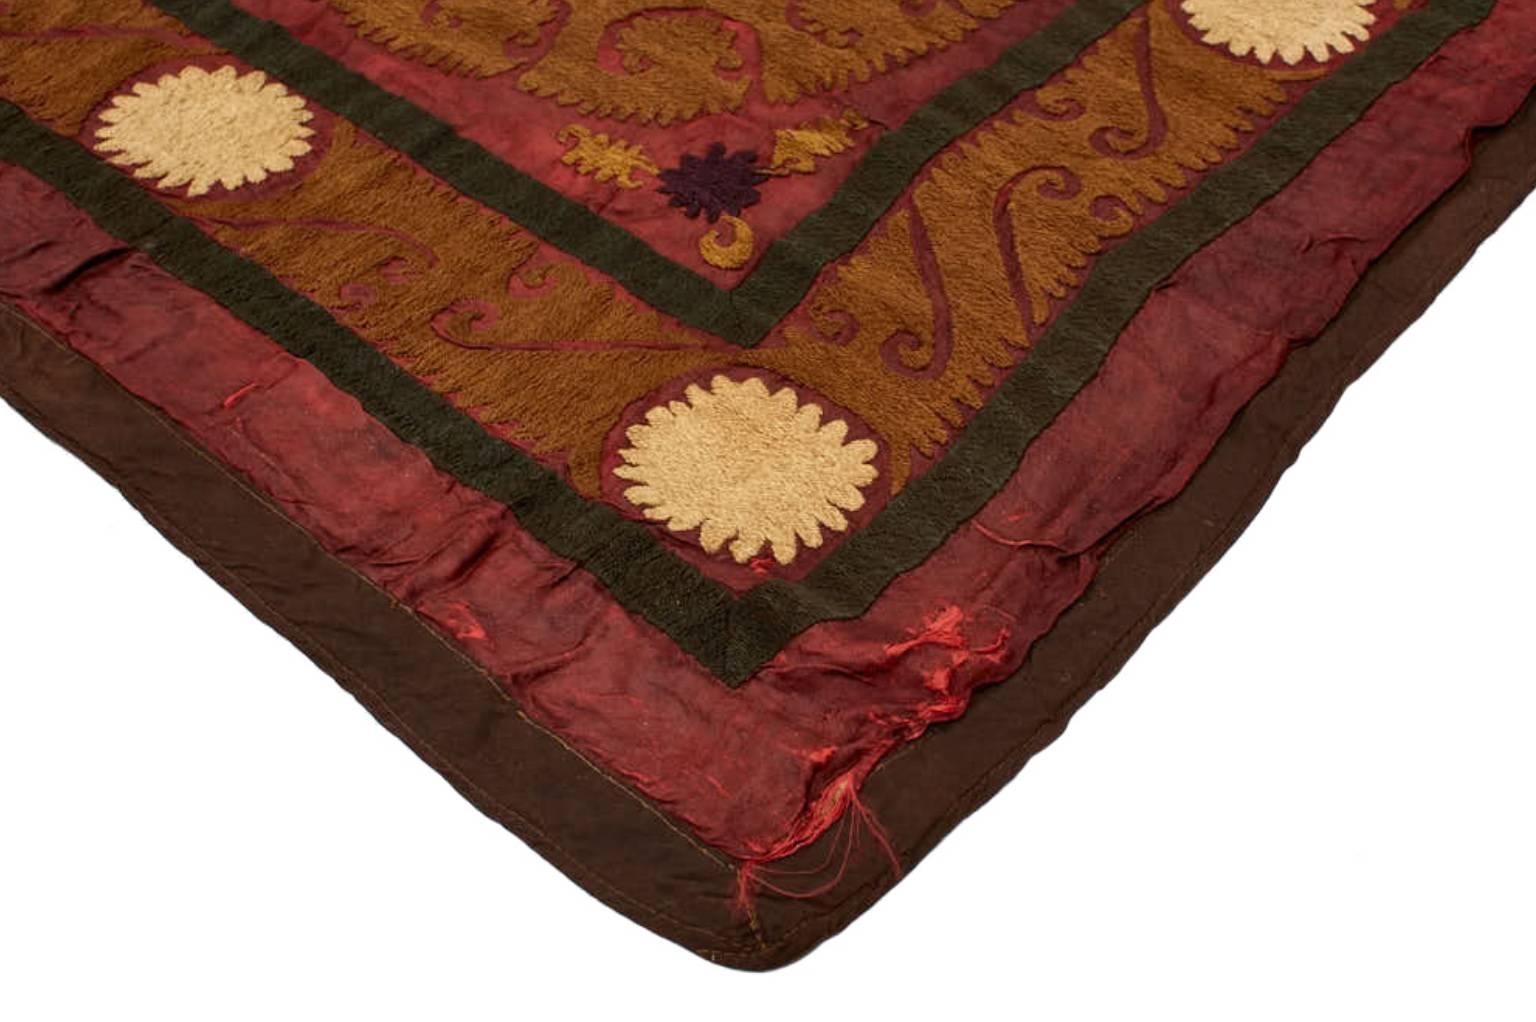 20th Century Vintage Suzani Purple and Brown Textile